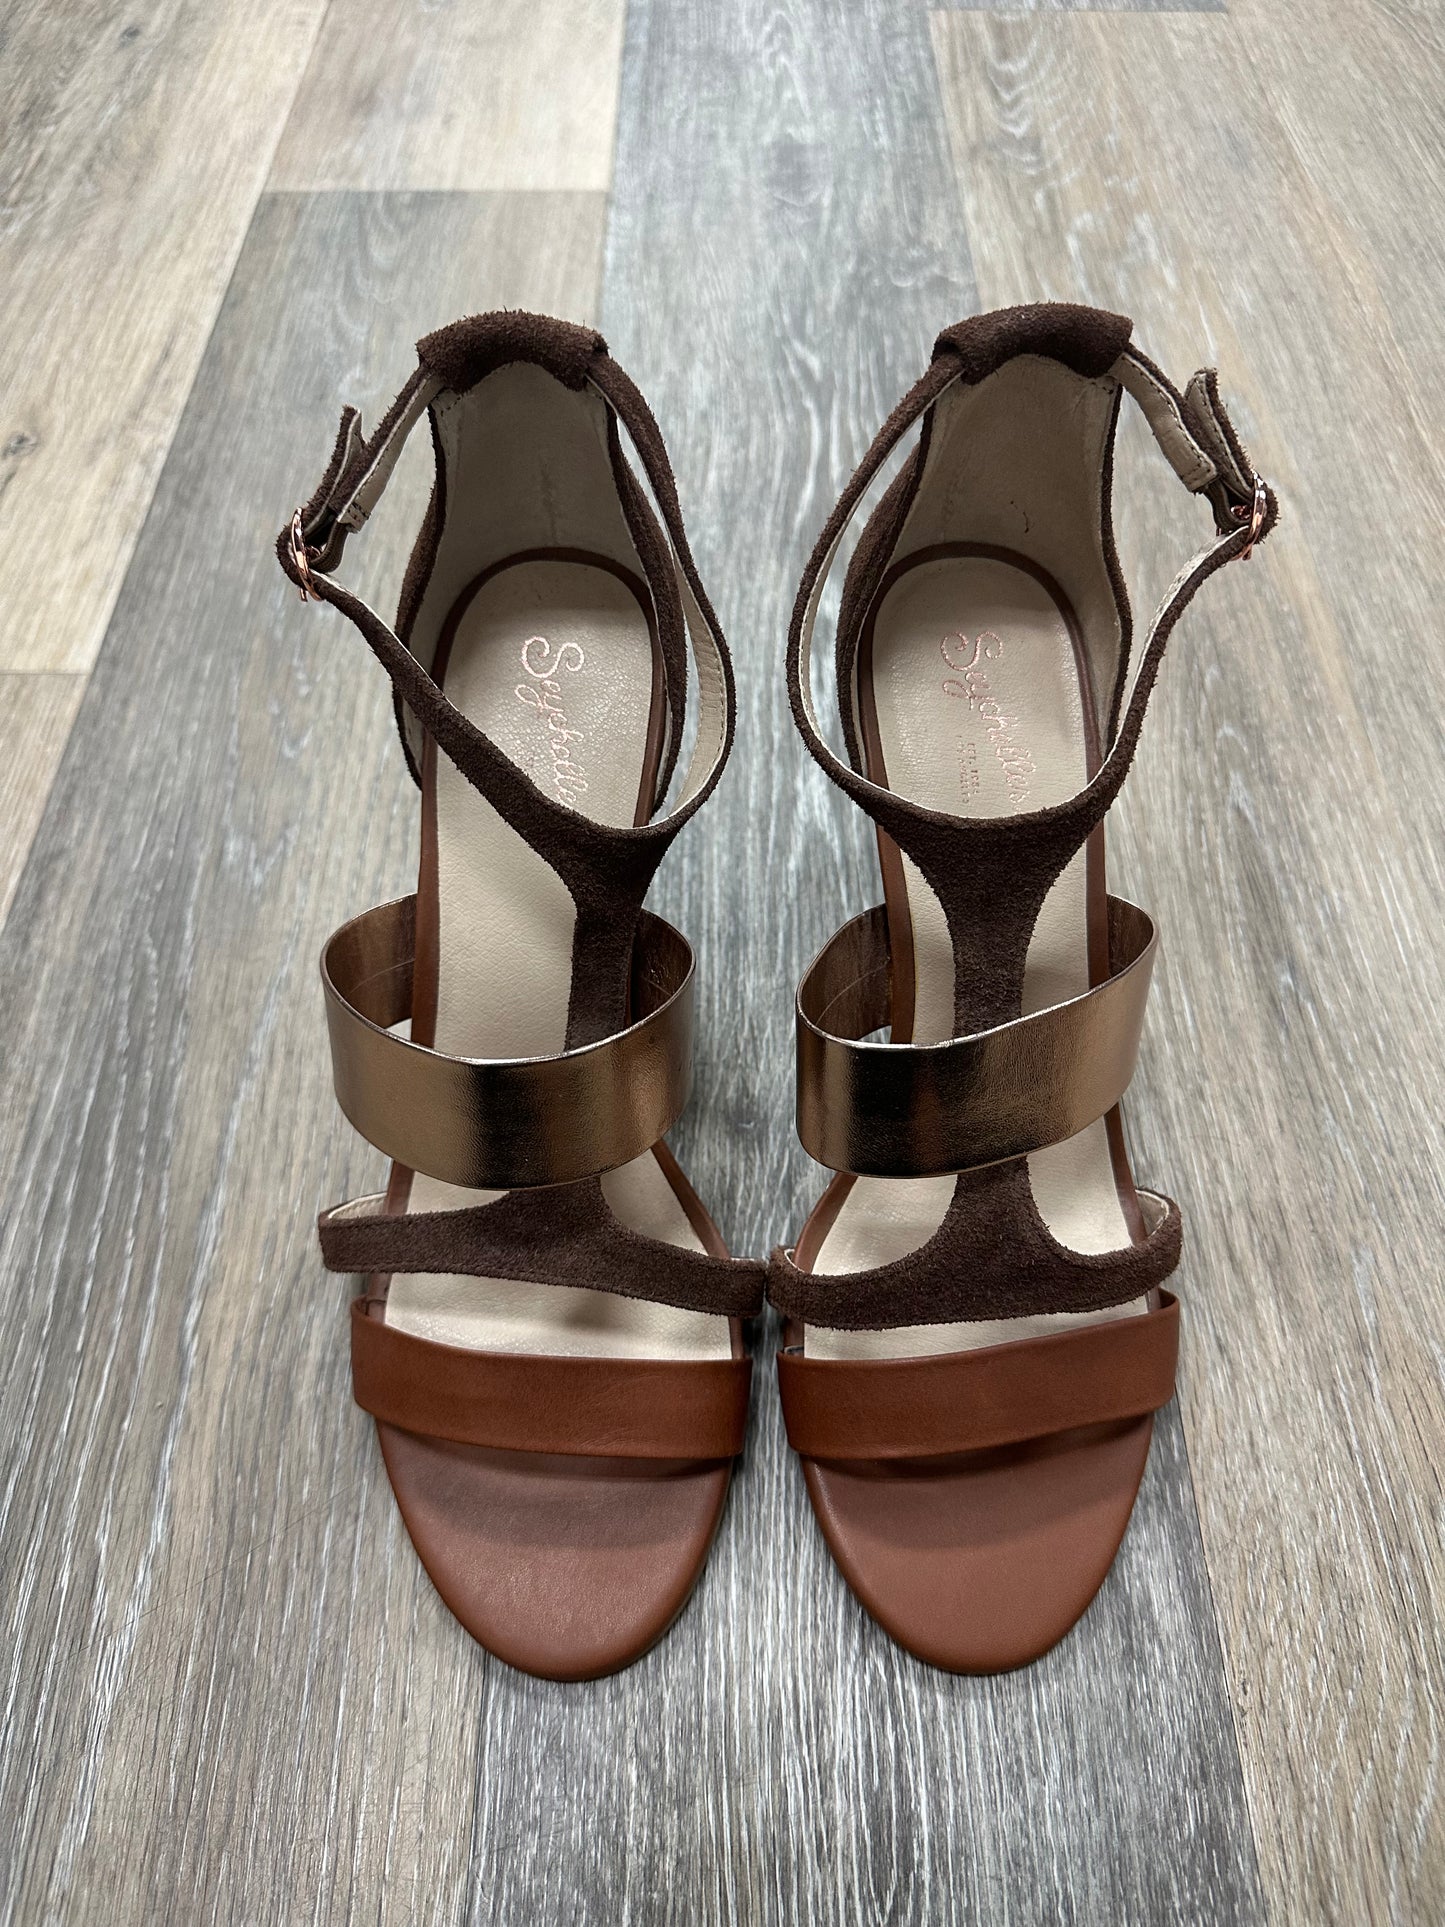 Sandals Heels Block By Seychelles  Size: 8.5